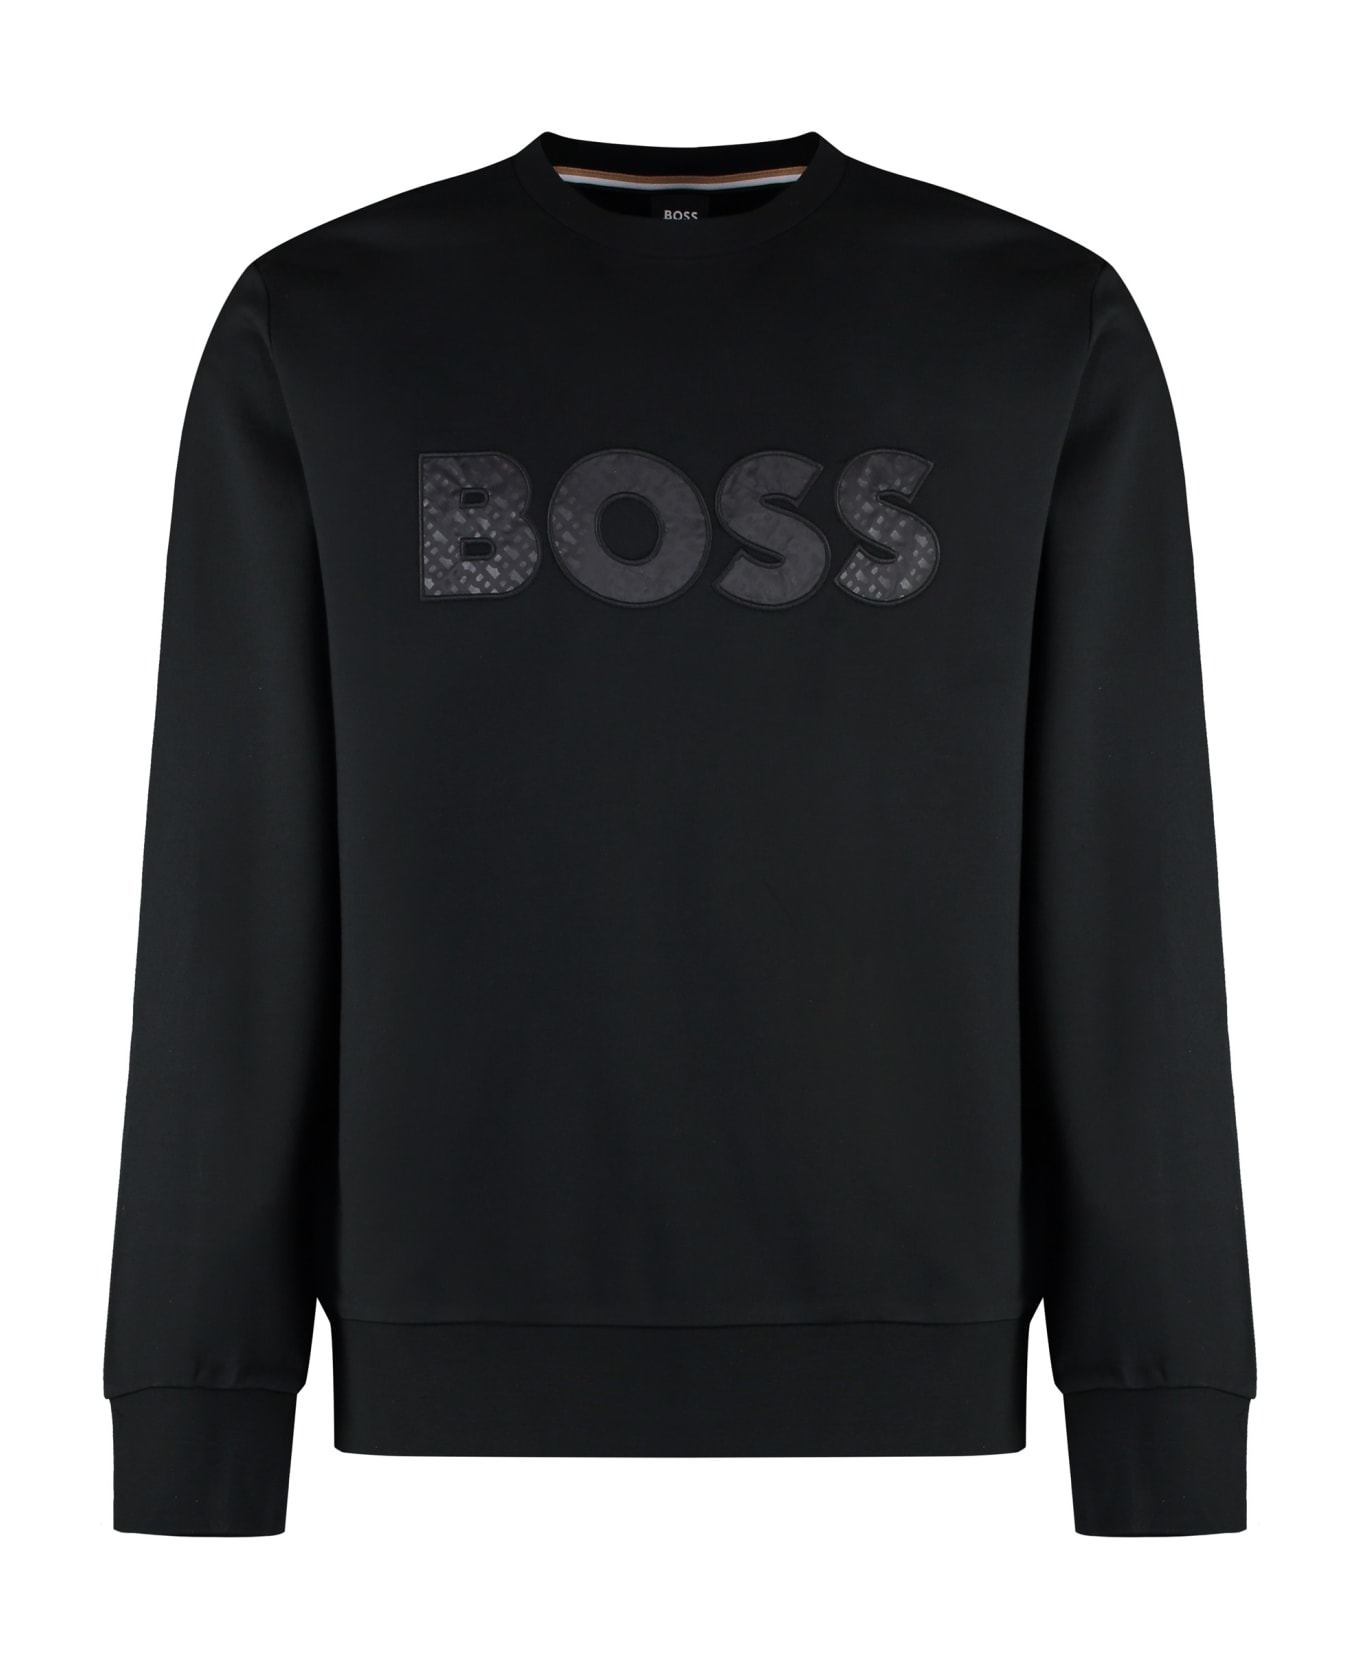 Hugo Boss Cotton Crew-neck Sweatshirt - black